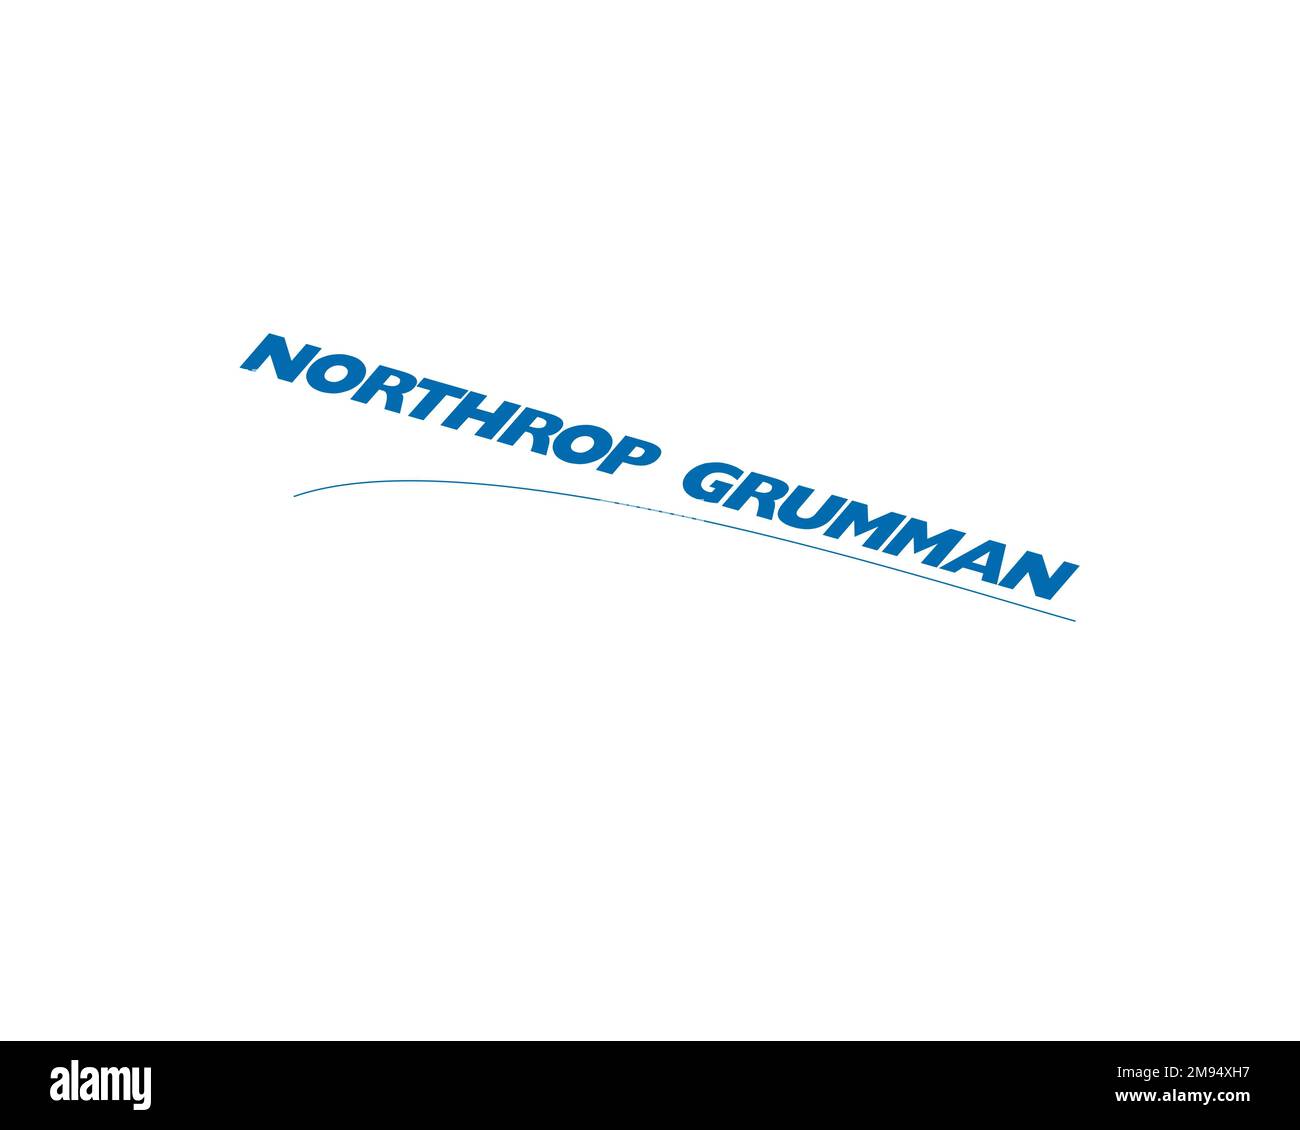 Northrop Grumman Innovation Systems, rotated logo, white background B Stock Photo